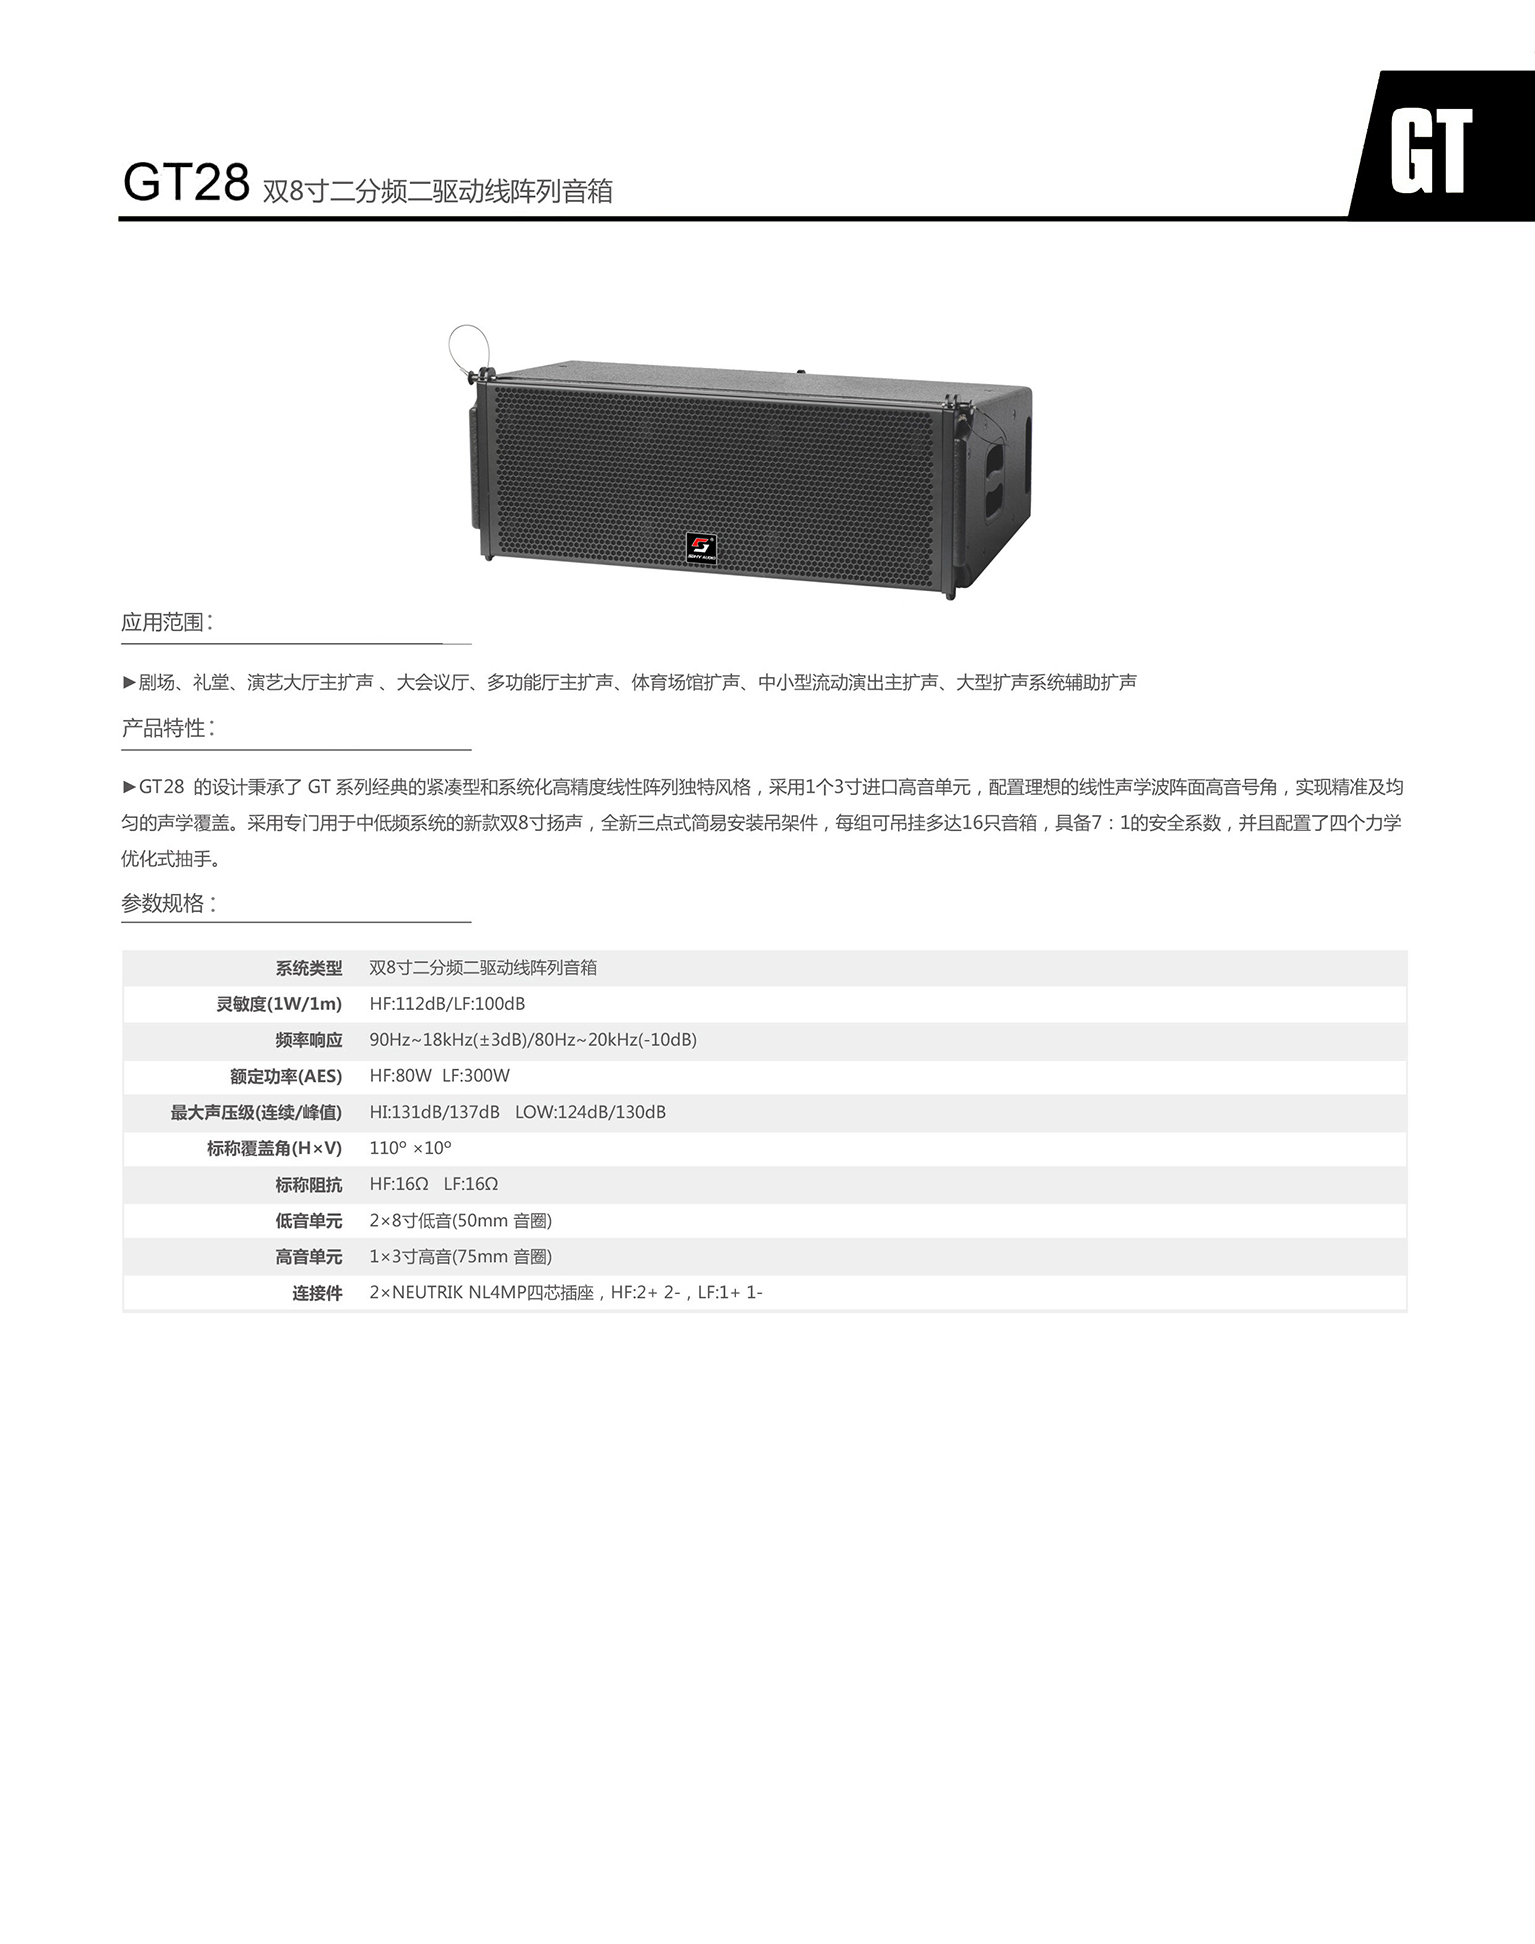 GT28 双8寸二分频二驱动线阵列扬声器.jpg